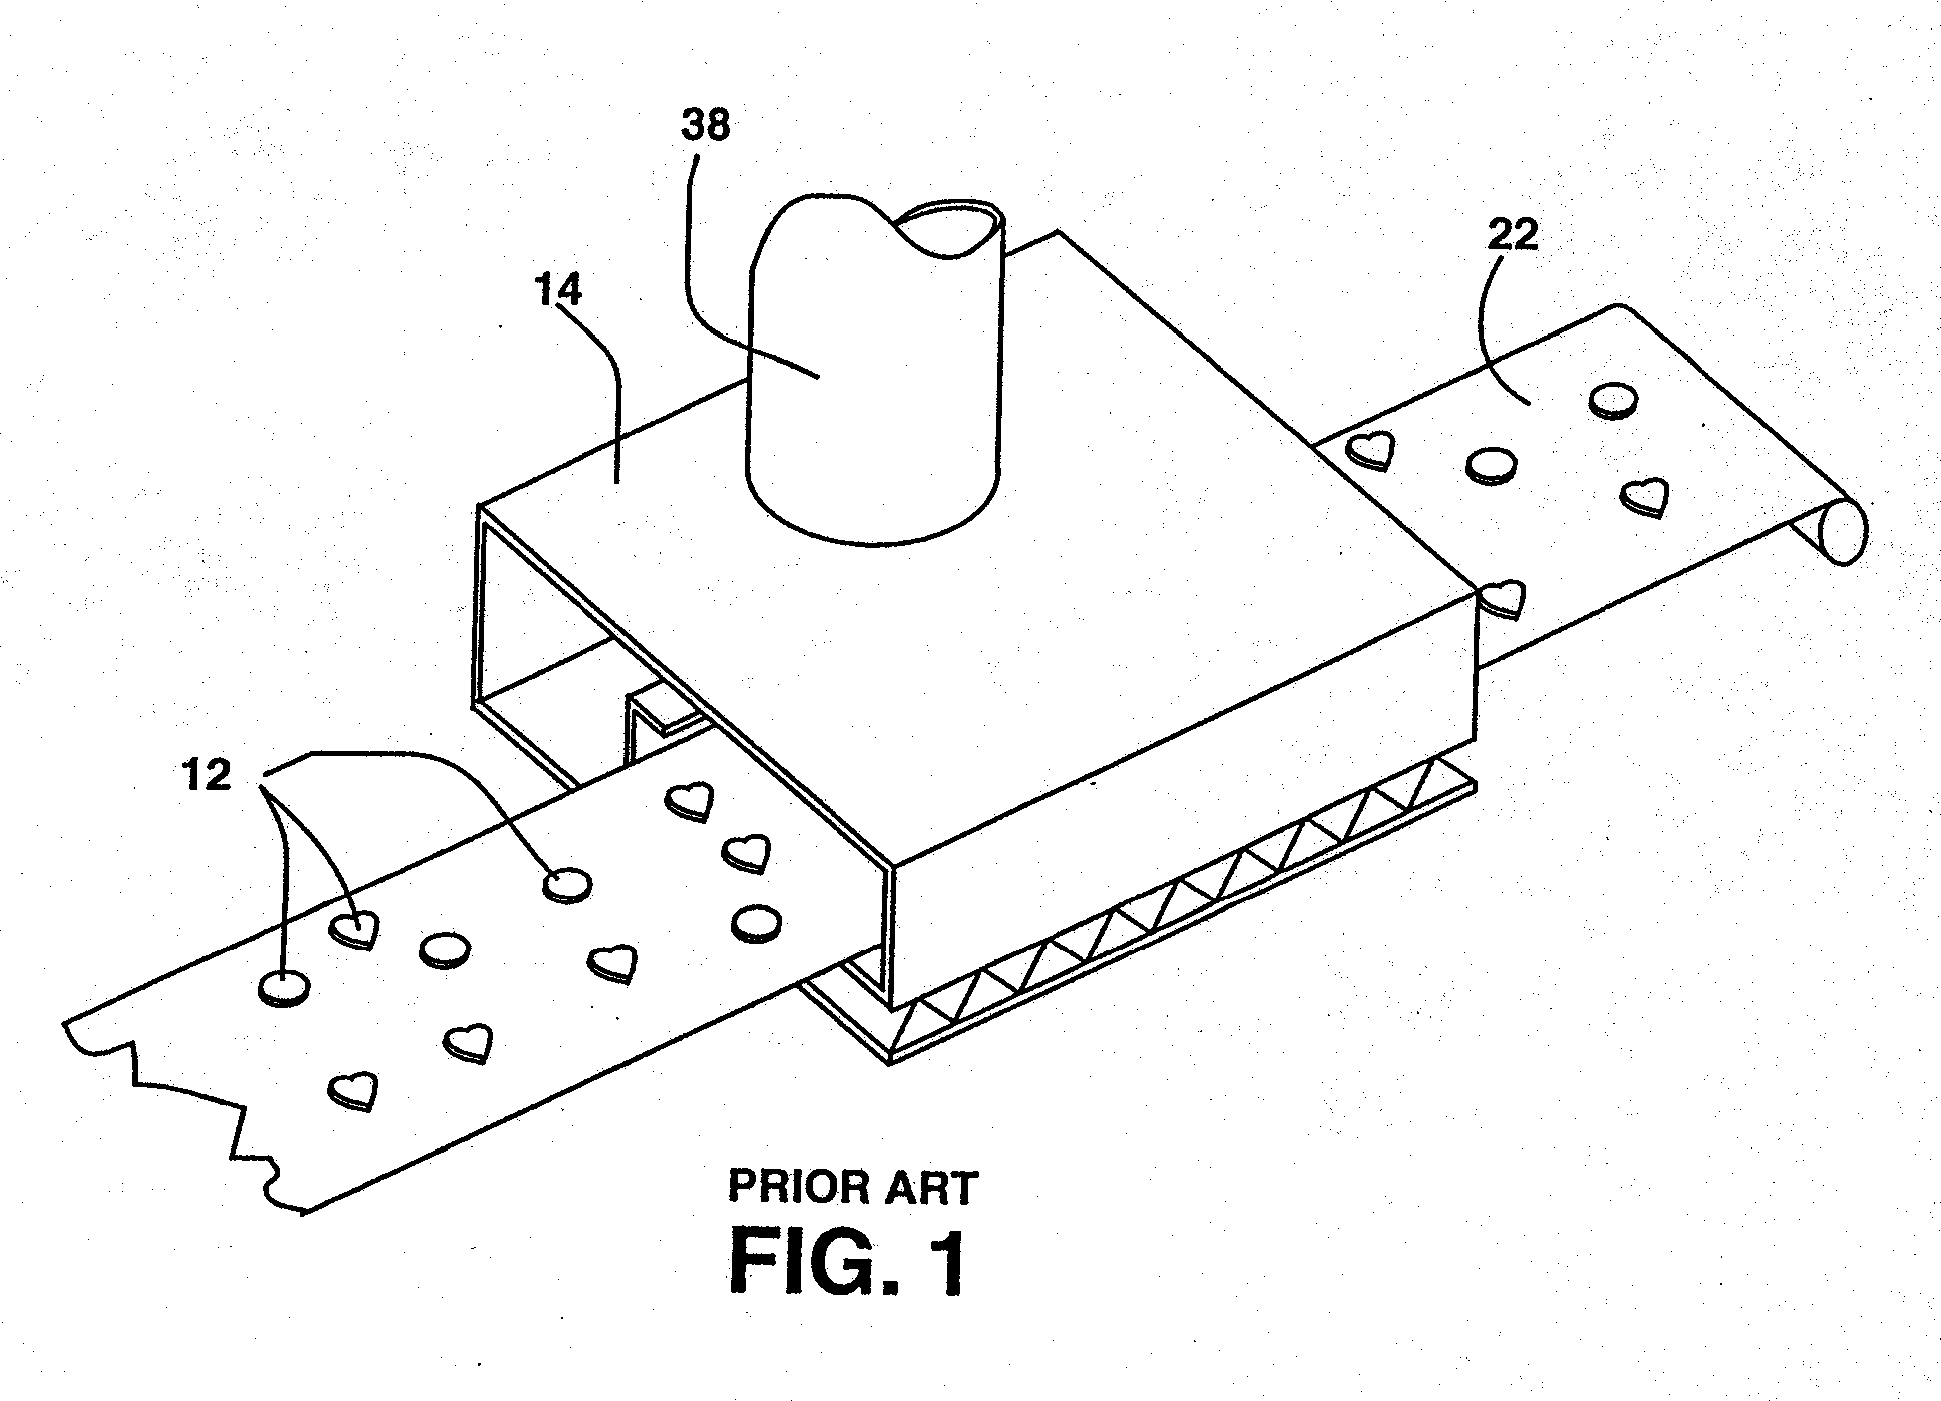 Apparatus and Method for Microwave Heating Using Metallic Conveyor Belt